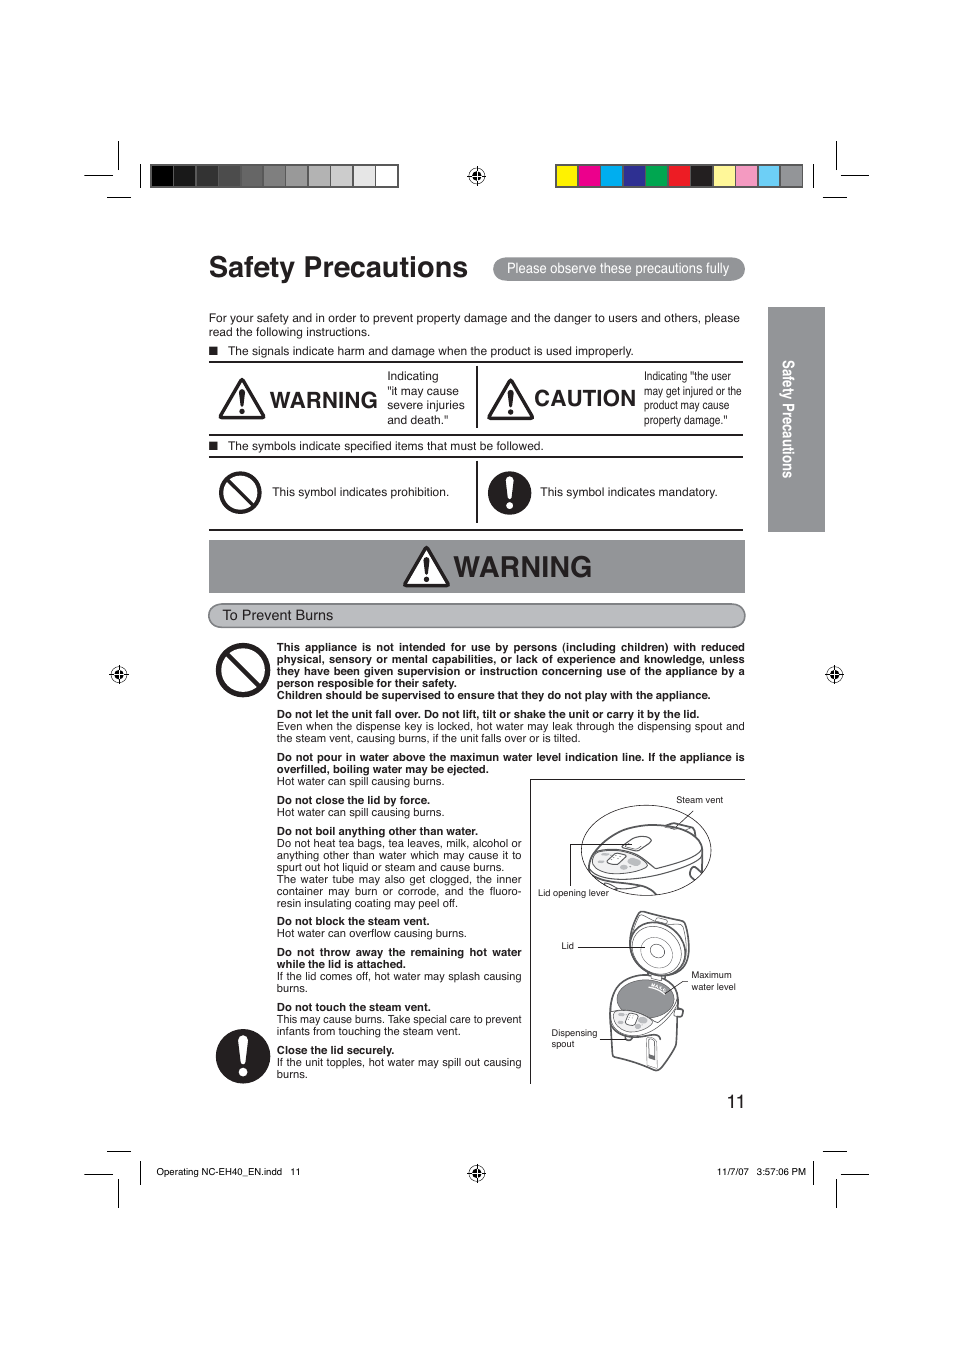 Safety precautions, Warning, Caution | Panasonic NC-EH40P Manuel d'utilisation | Page 11 / 52